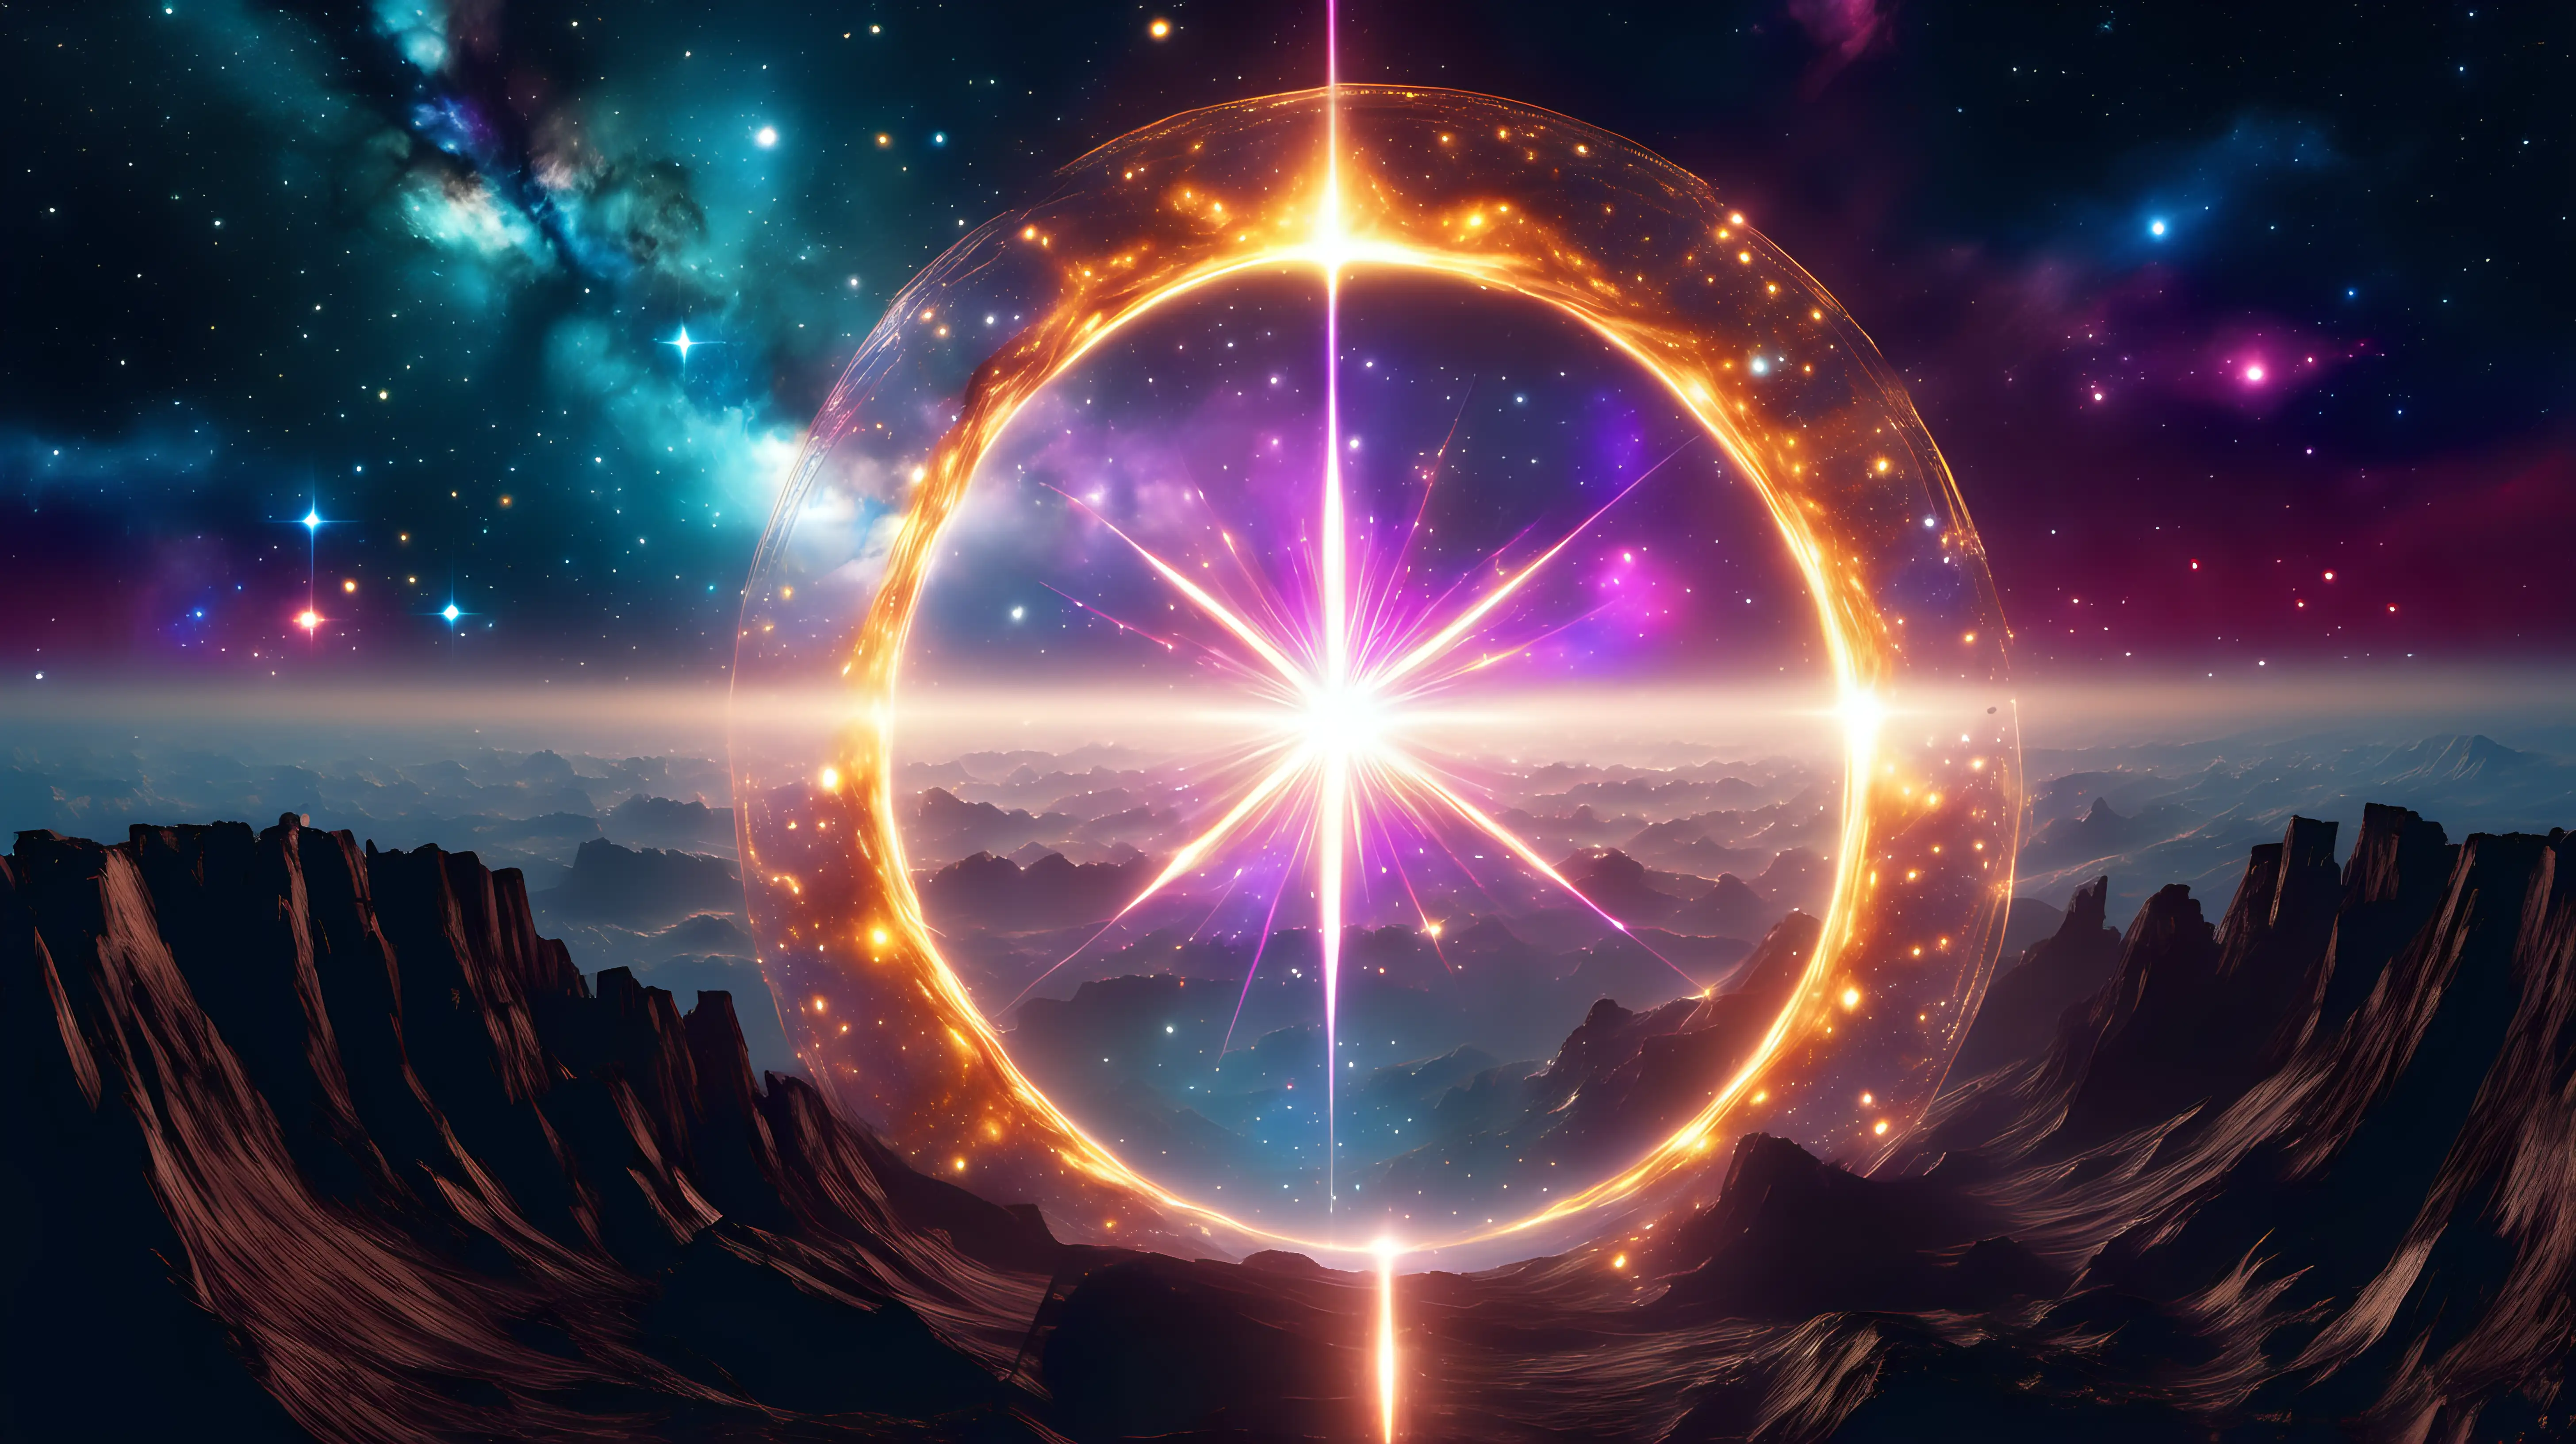 Cosmic Portal Opening in StarFilled Sky Spectacular Interstellar Scene